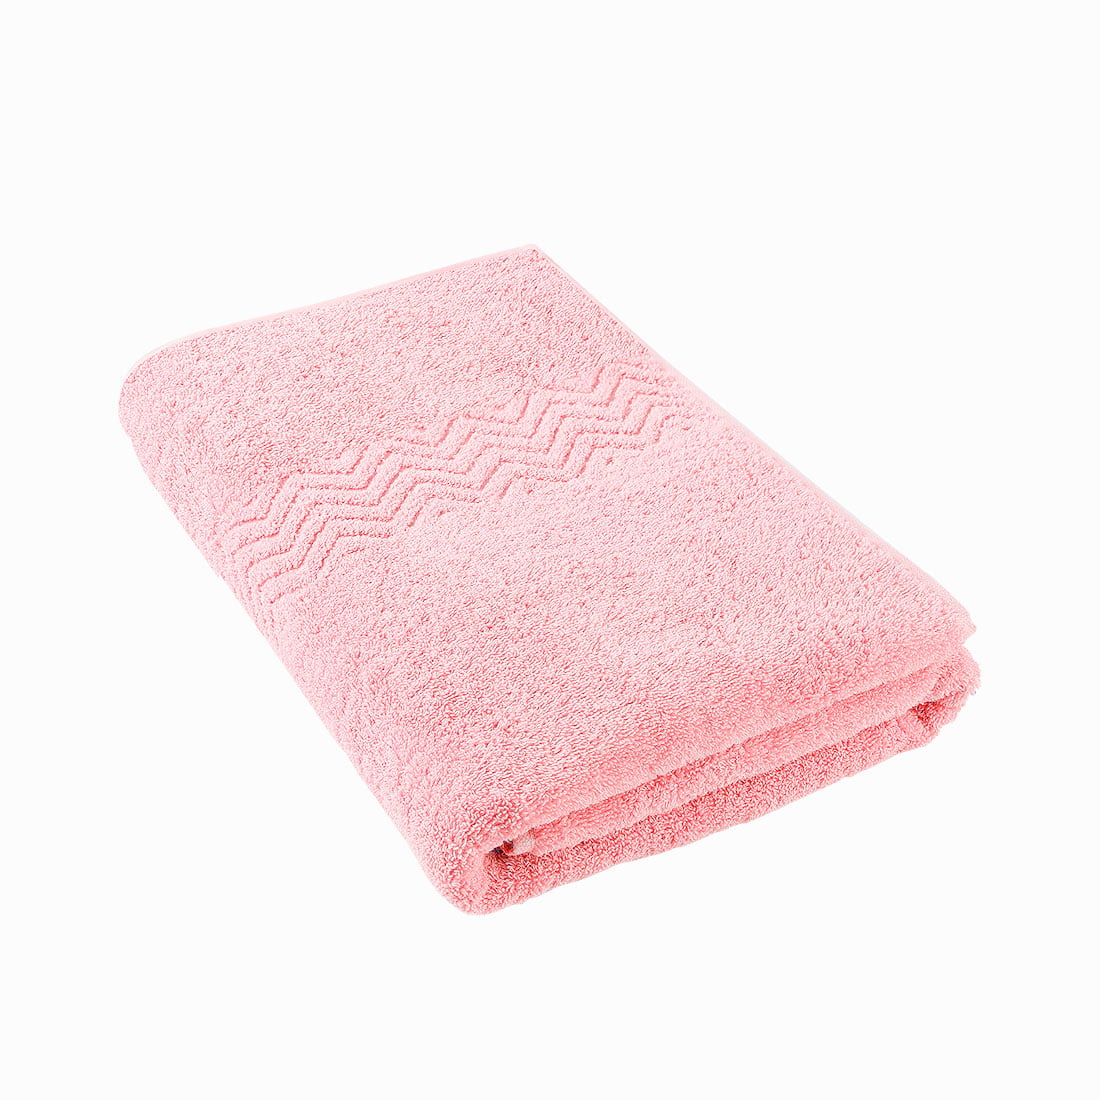 Unique Bargains 4-Pack 100% Cotton Plush Bath Towels 27 inchx 54 inch Pink, Size: 27 inch x 54 inch